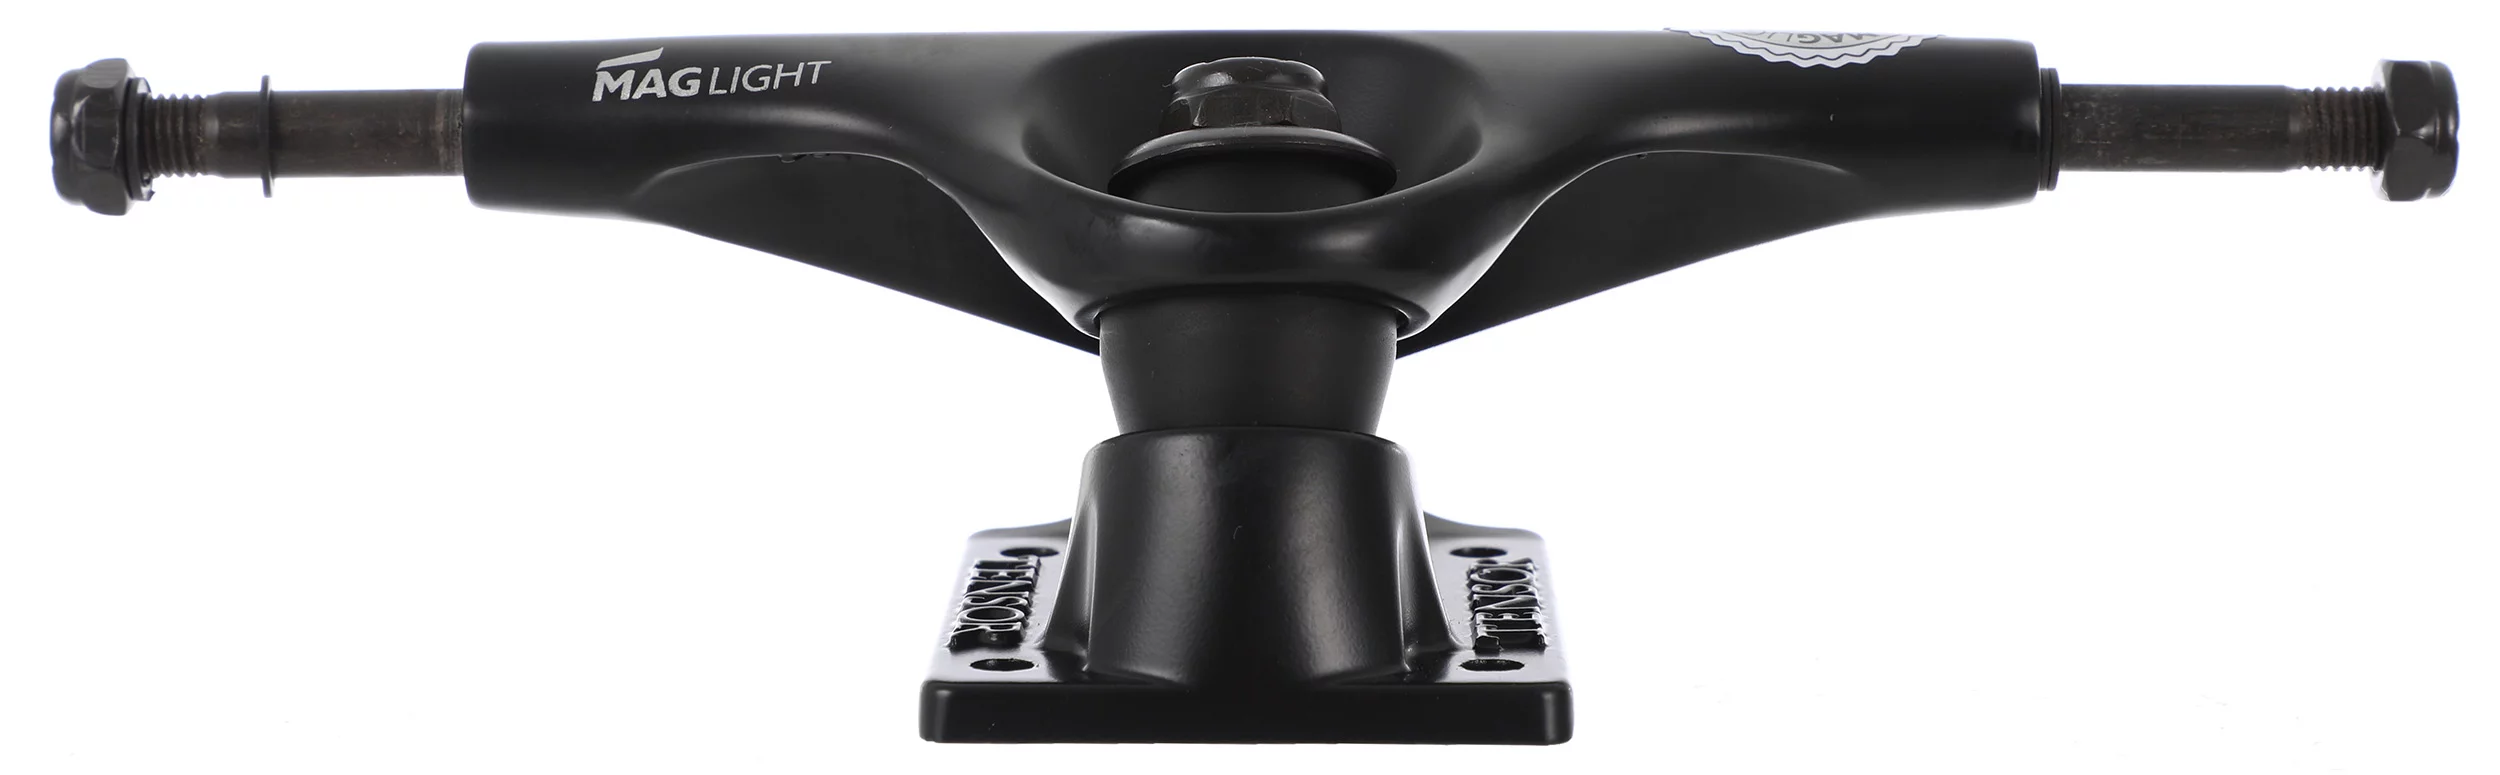 Tensor Mag Light Skateboard Trucks - black (5.5 lo) - Free ...